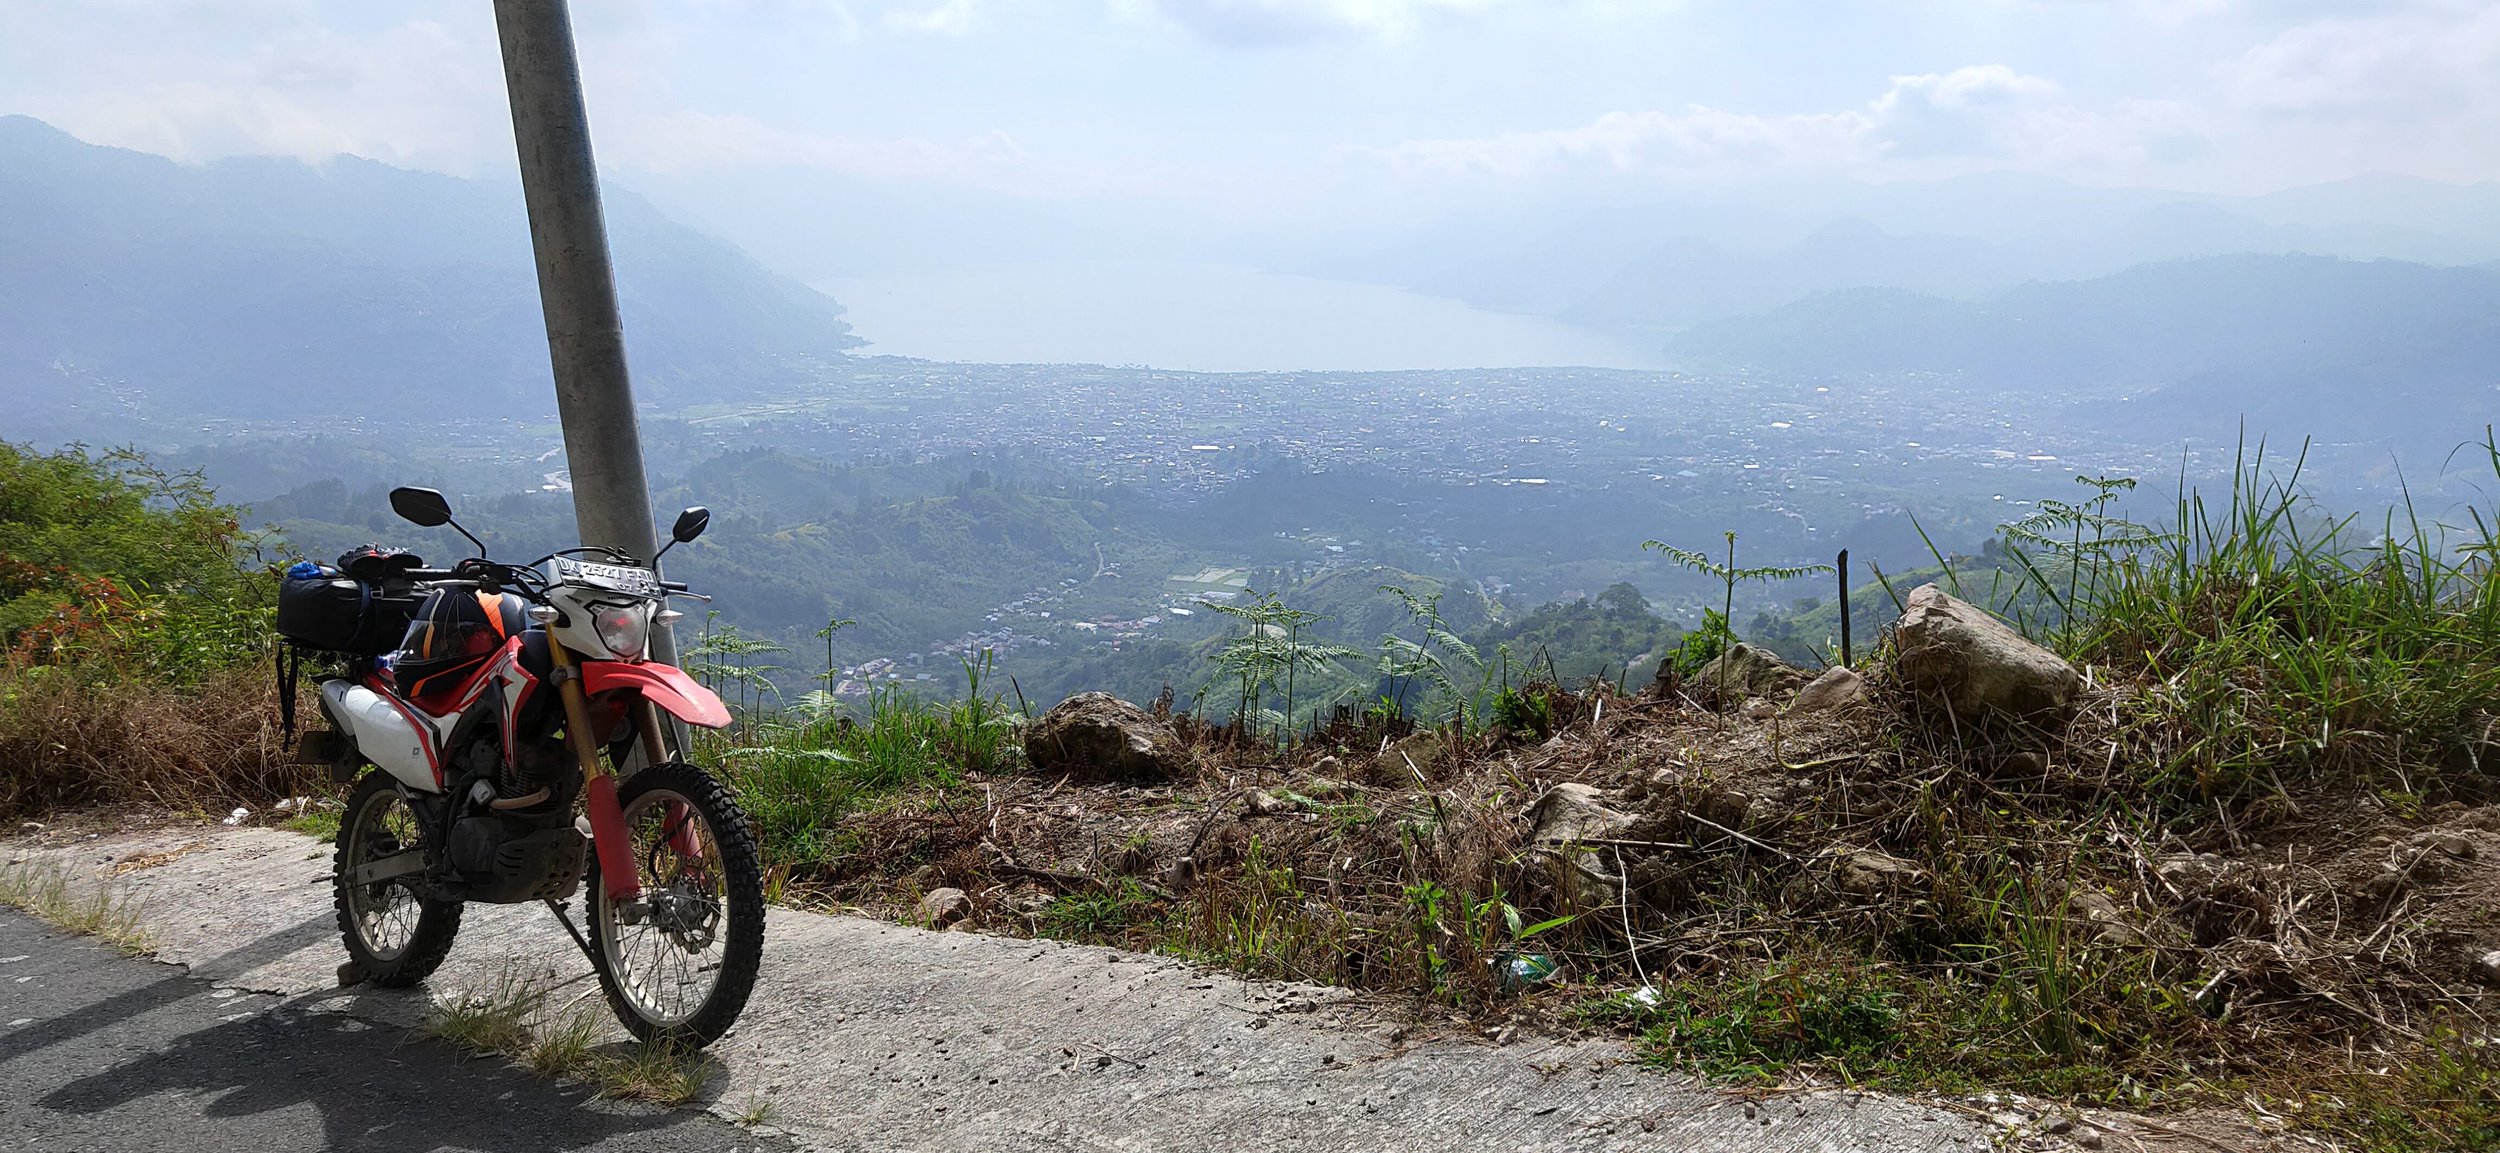 Dustin-Evans-Indonesia-Adventure-Rider-Radio-Motorcycle-Podcast-9.jpg